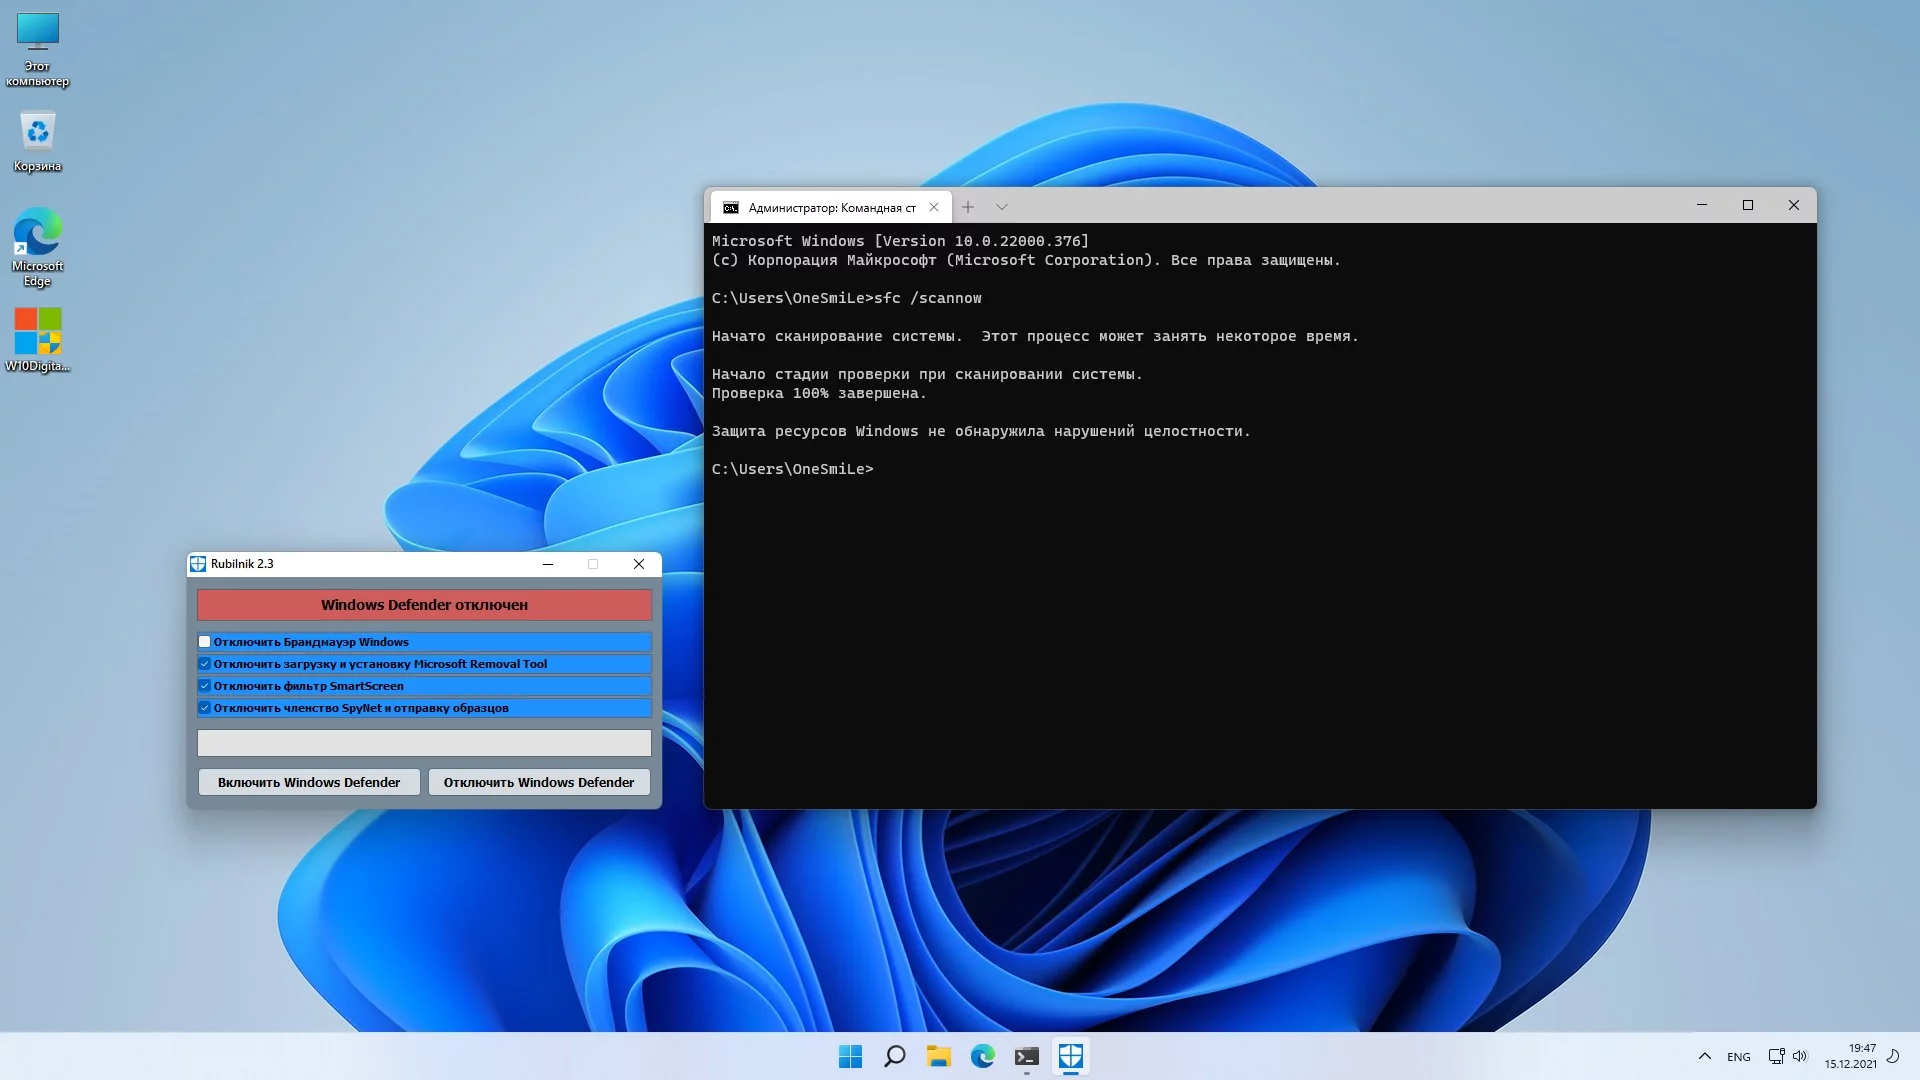 Klitecodekpack windows 11 x64. Версия виндовс 11 21h2. Windows 11 Pro 21h2. Windows 11 рабочий стол. Установщик Windows 11.